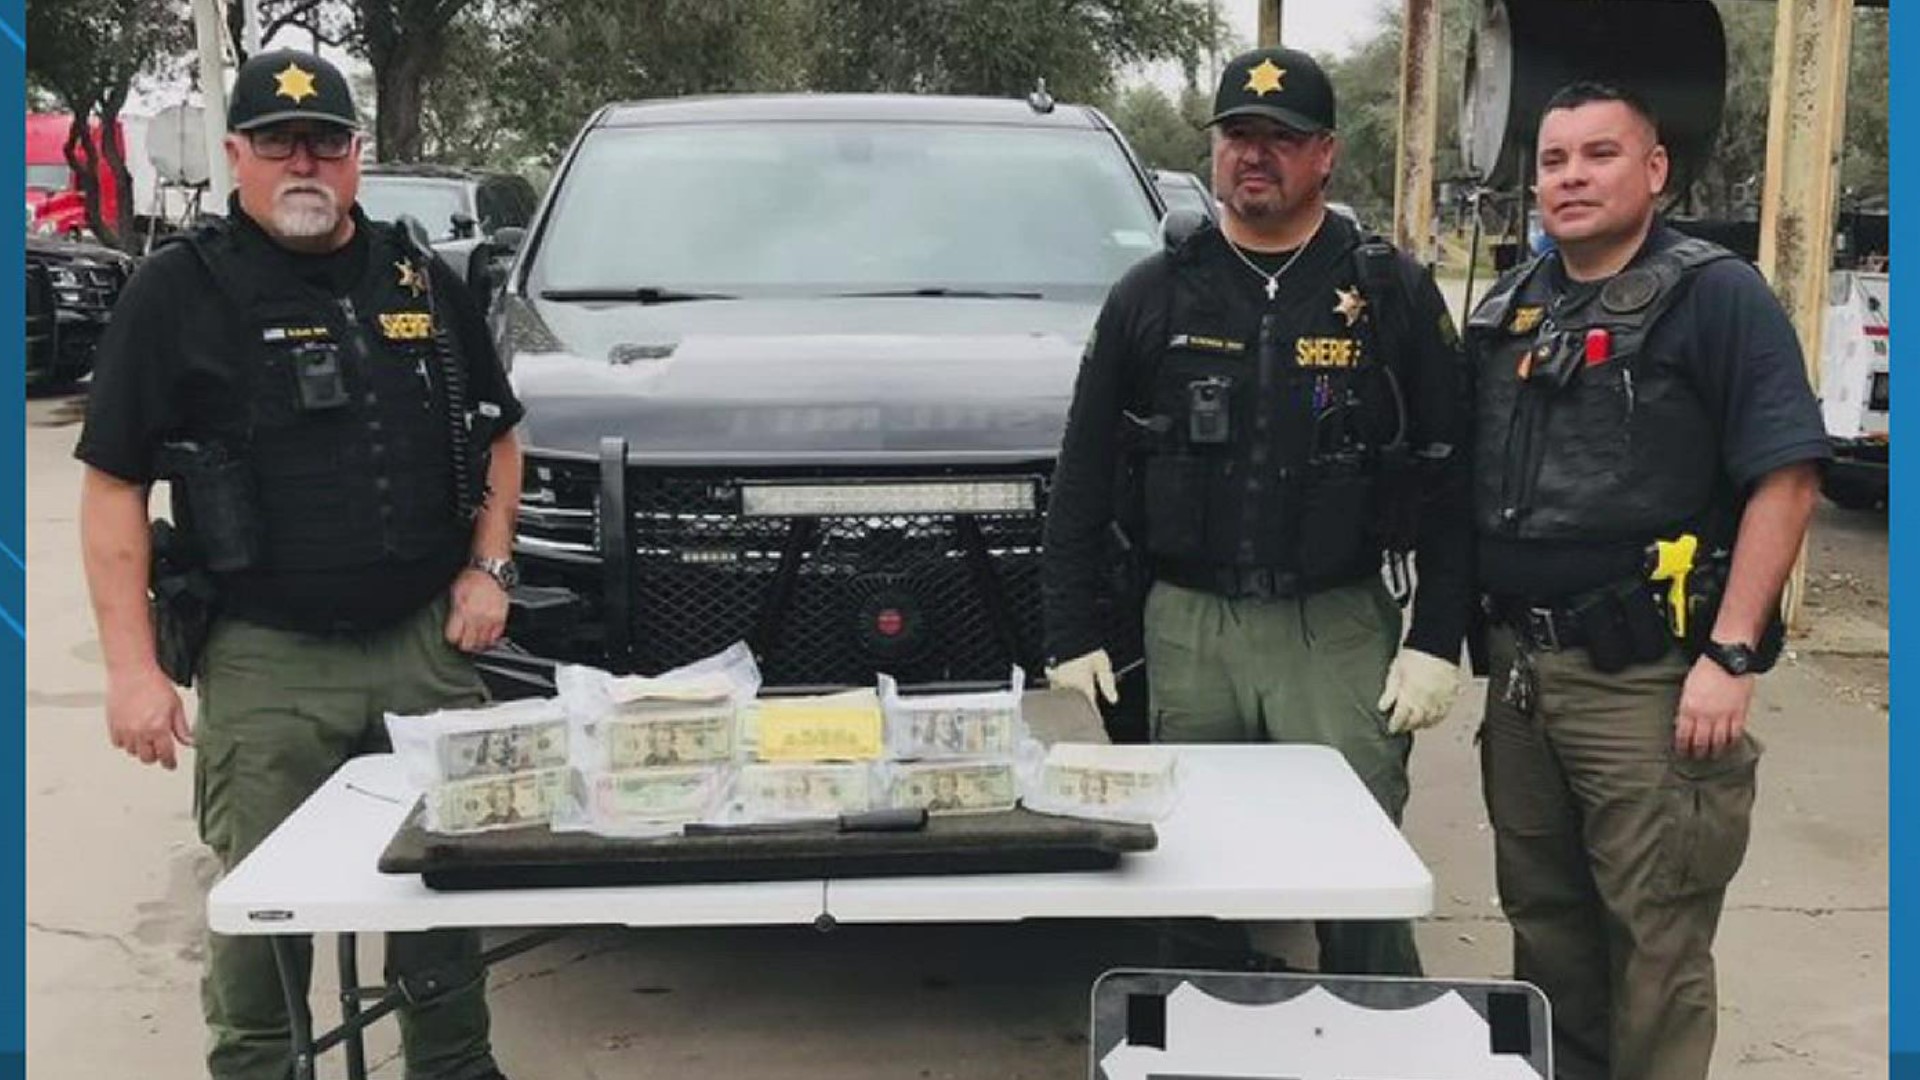 Deputies turned the cash in.